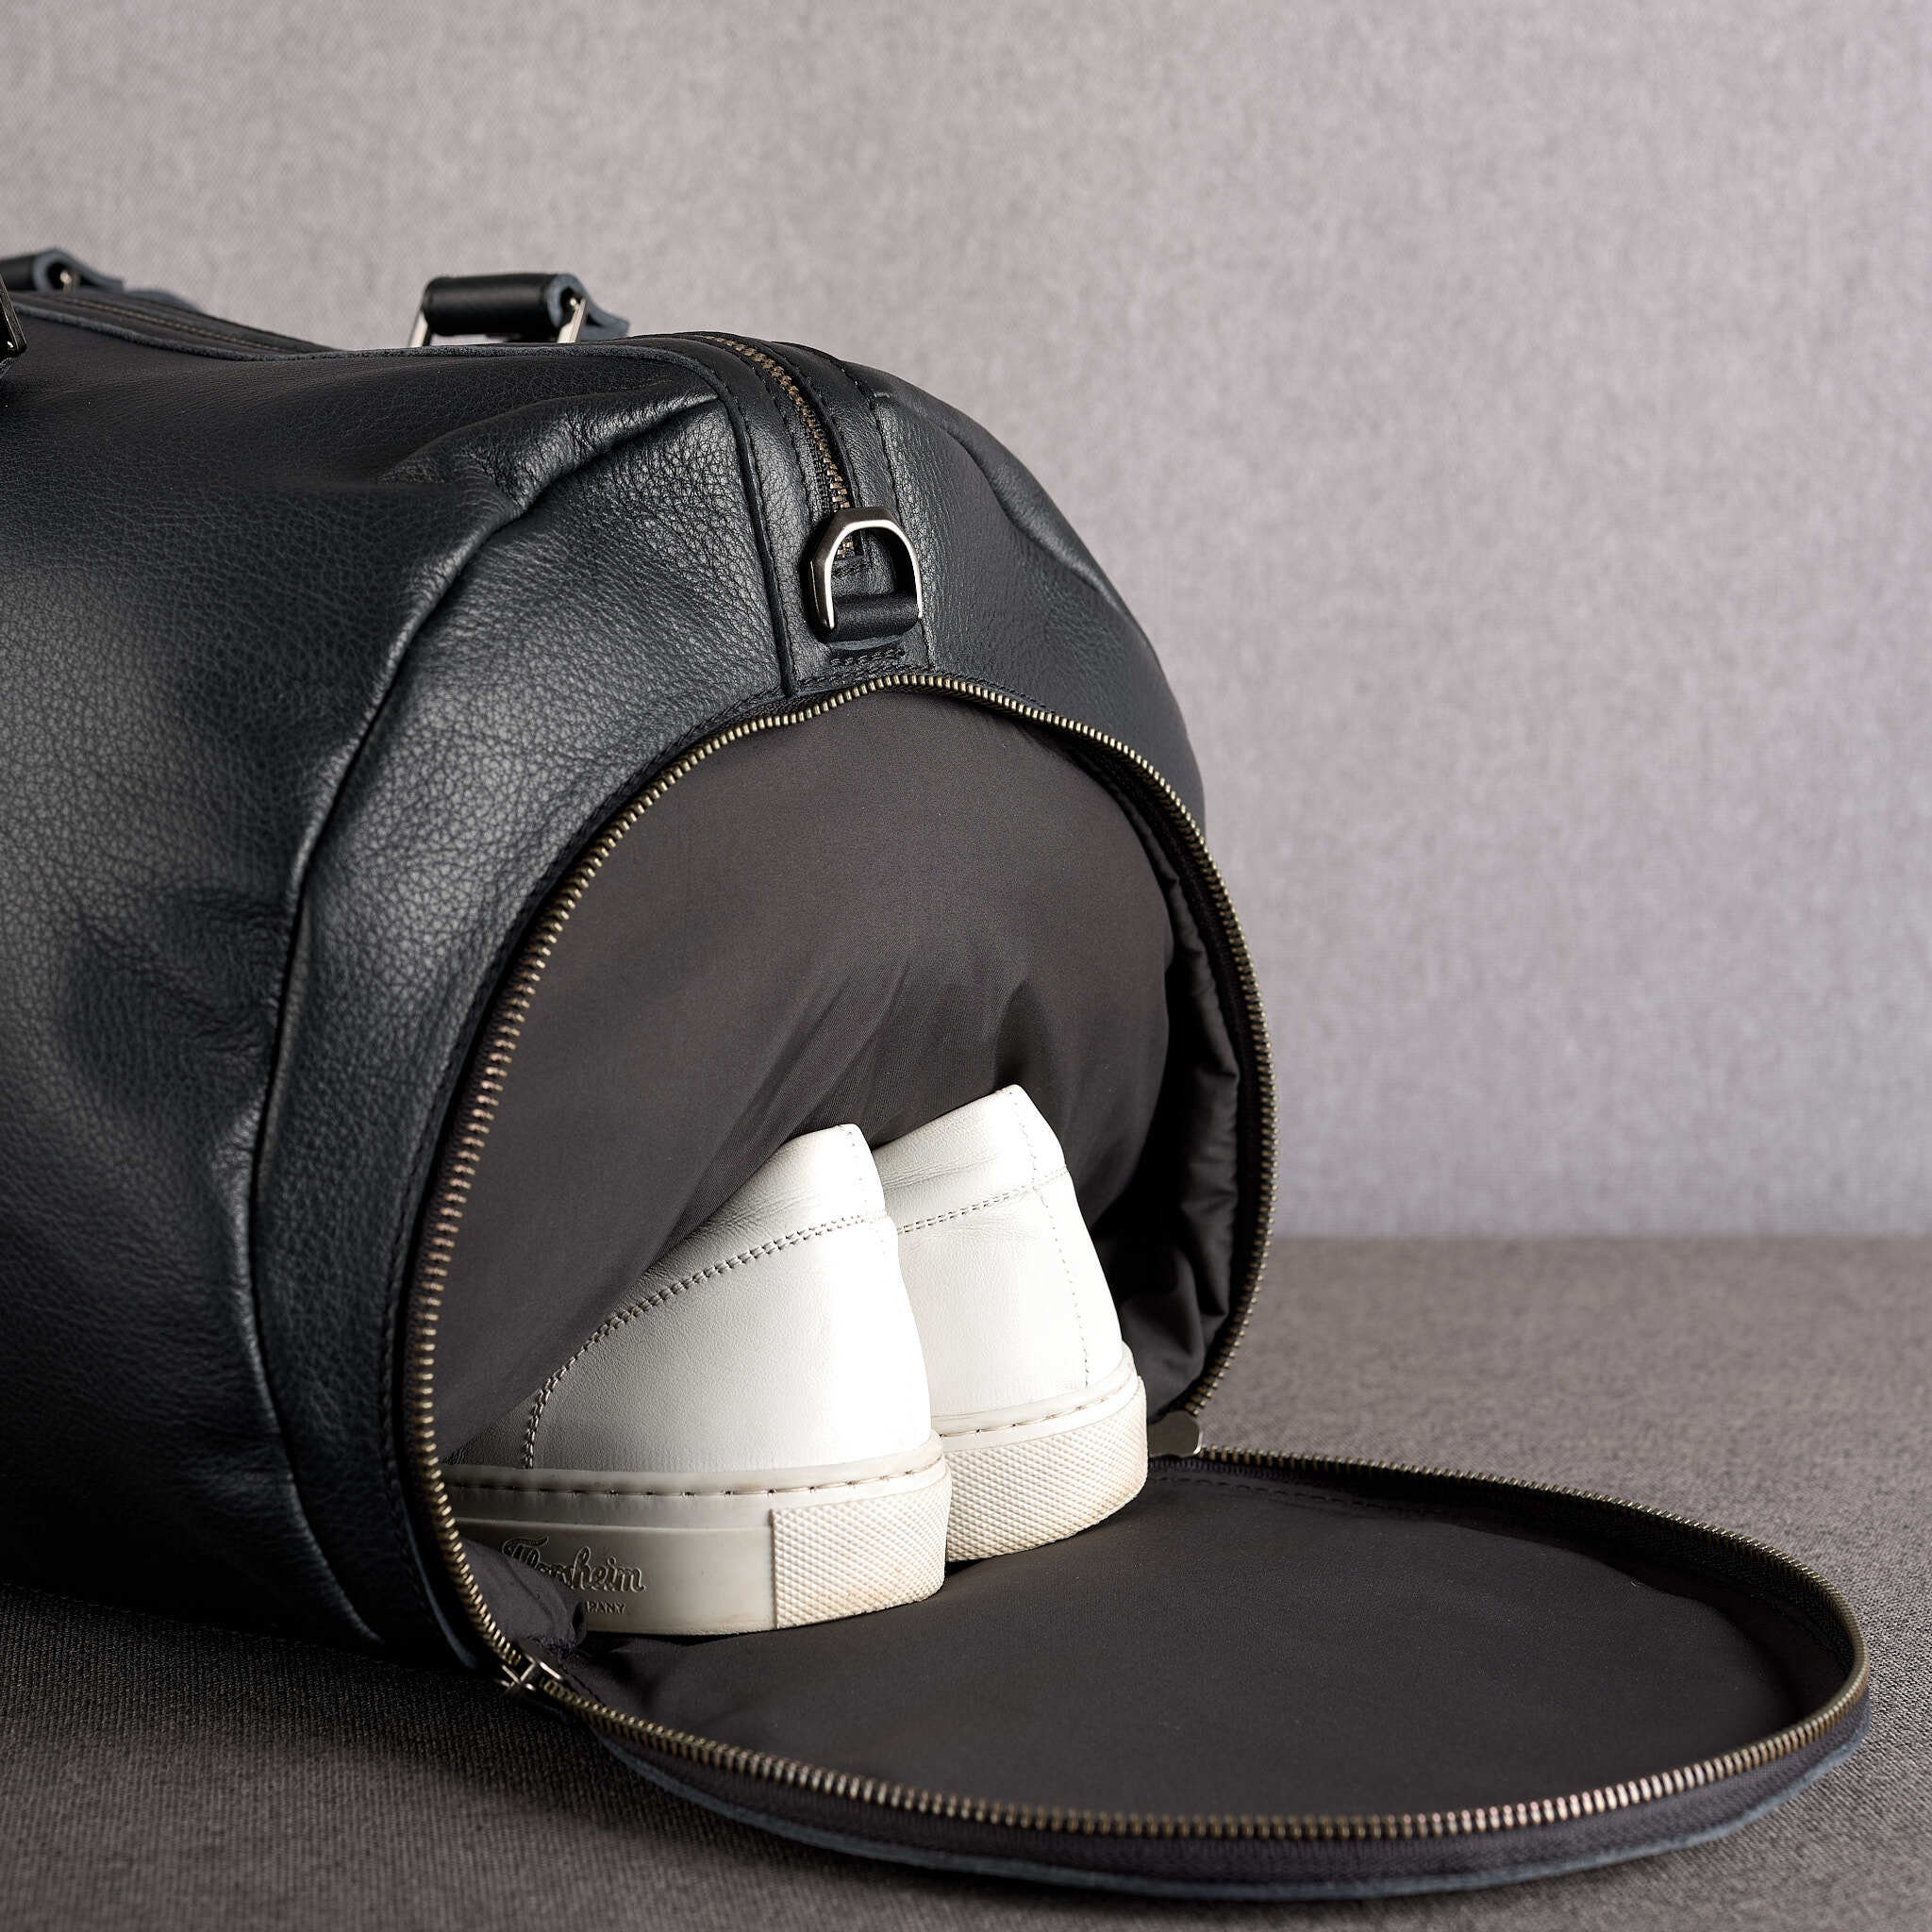 Grey Leather Duffle Bag Men Medium Shoulder Travel Weekender 